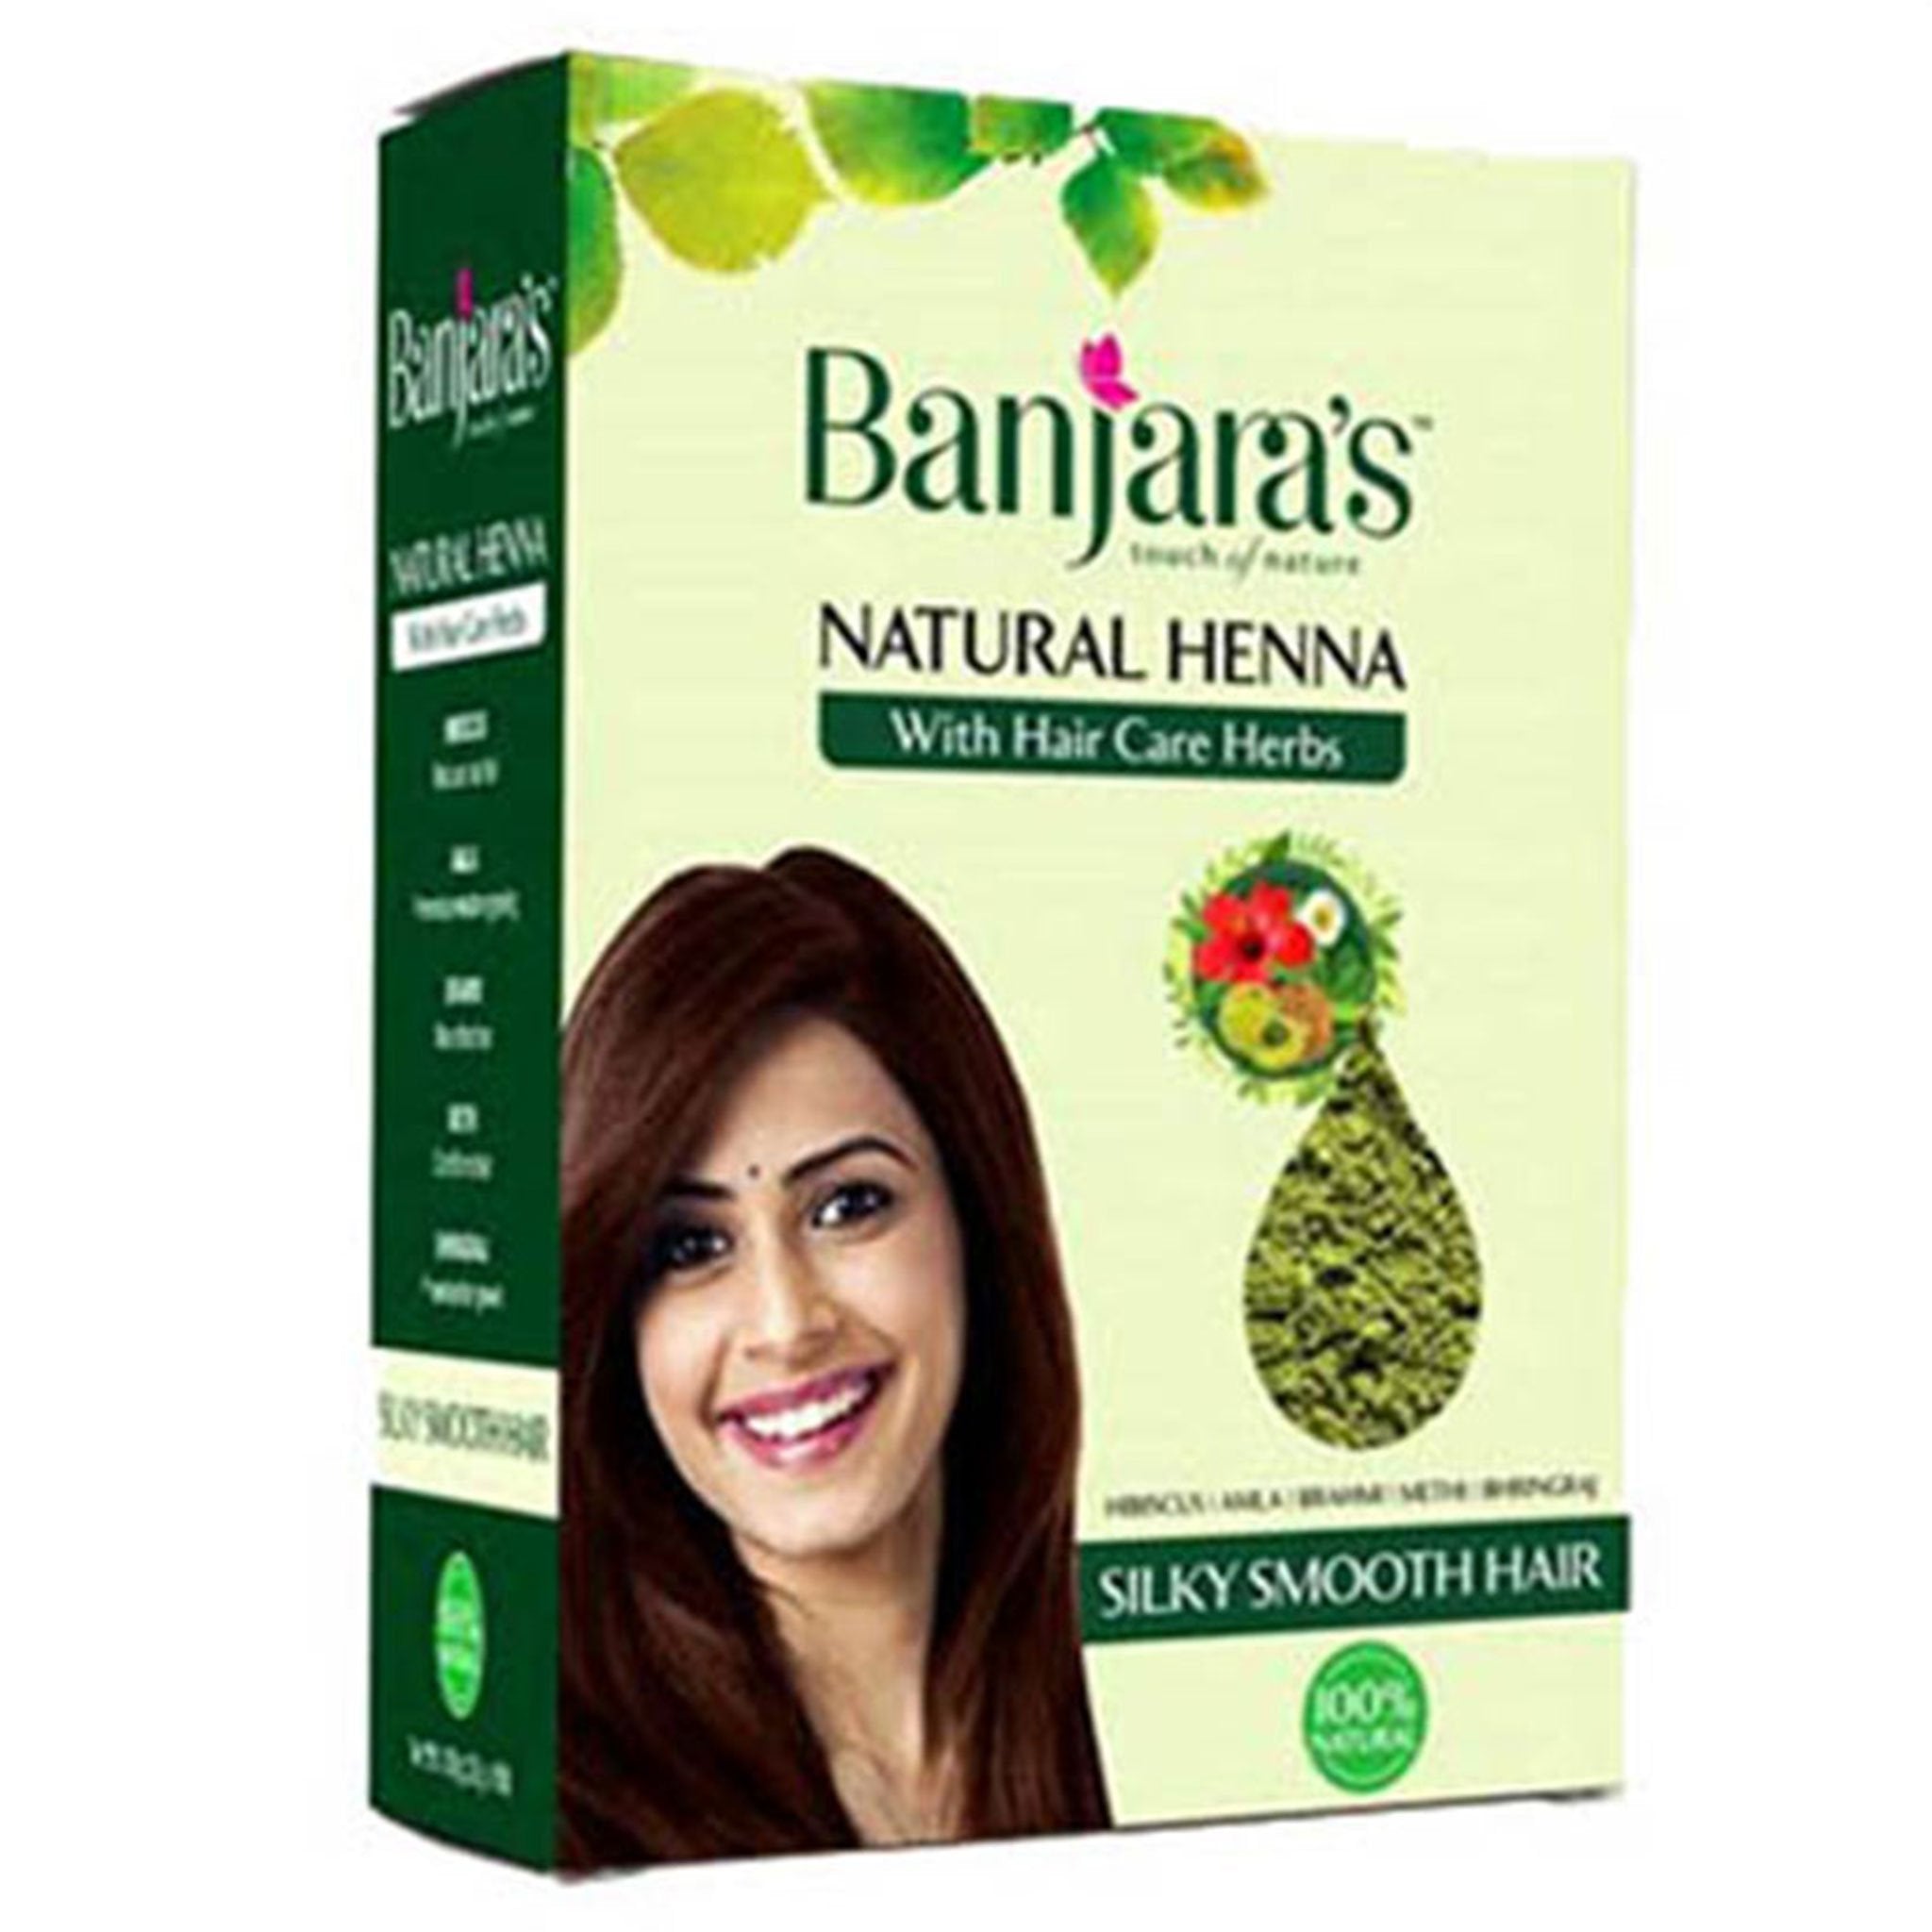 Banjaras Natural Henna with Hair Care Herbs 100g - Silky Smooth Hair Hibiscus/Amla/Methi/Bhringraj - Simpal Boutique